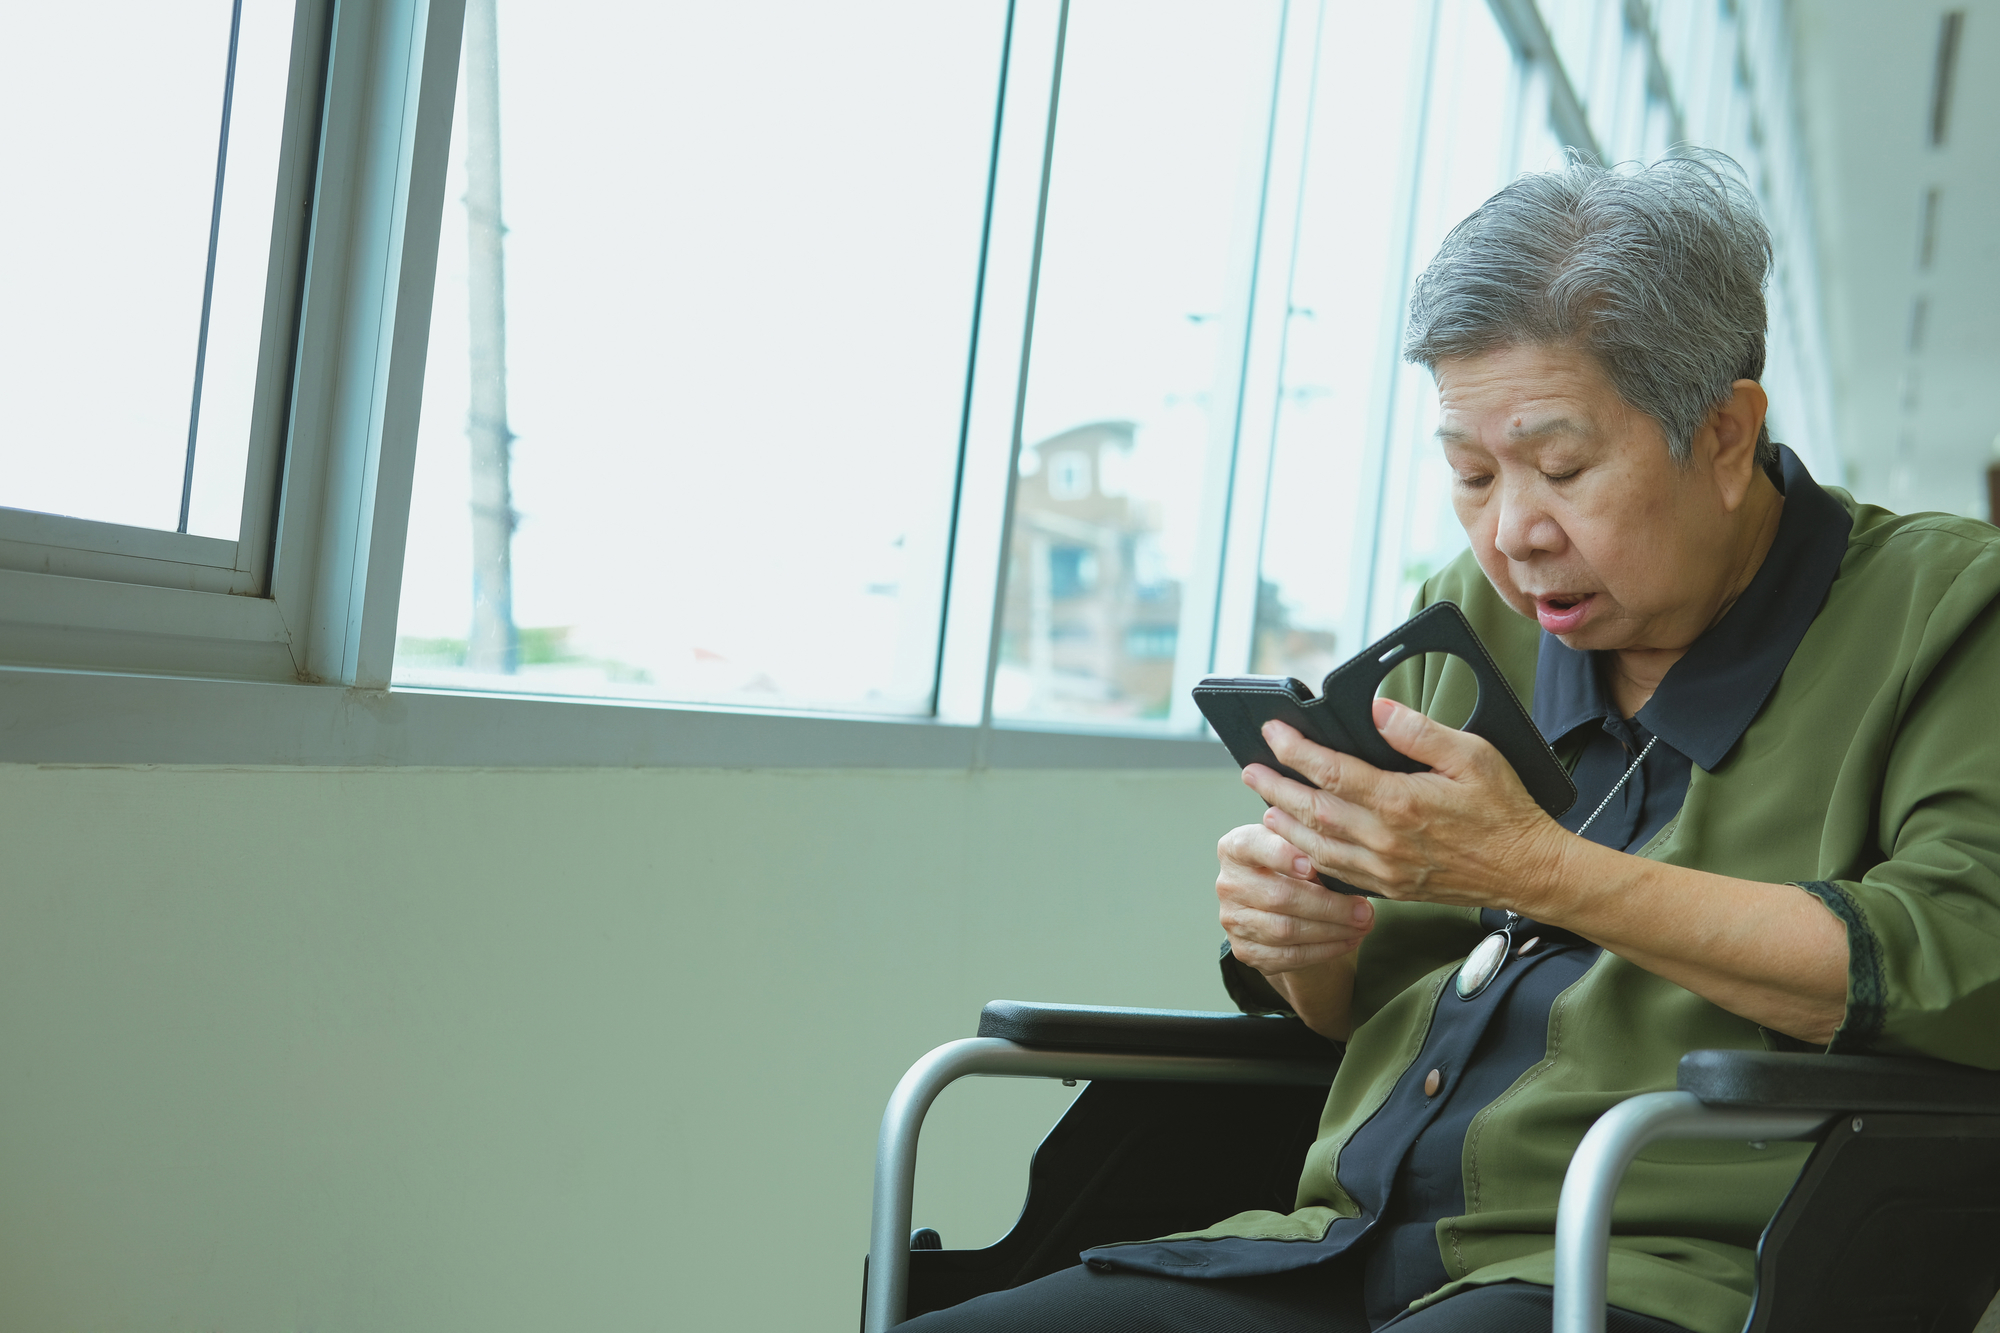 Elder woman in wheelchair holding mobile phone.